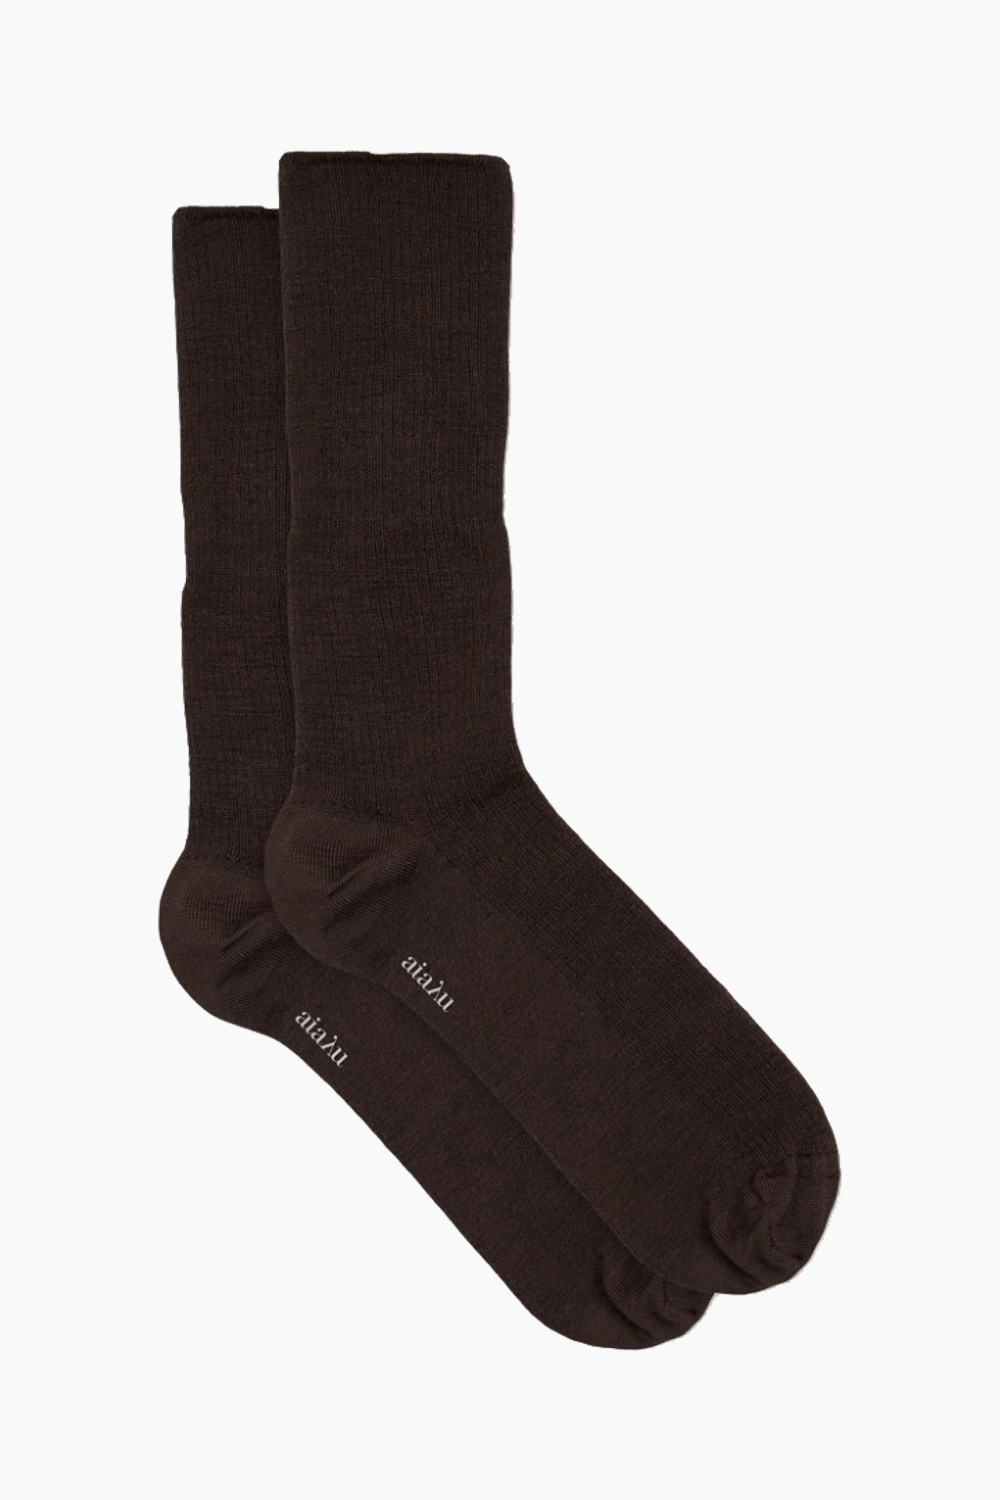 Se Wool Rib Socks - Brown - Aiayu - Brun 36-38 hos QNTS.dk